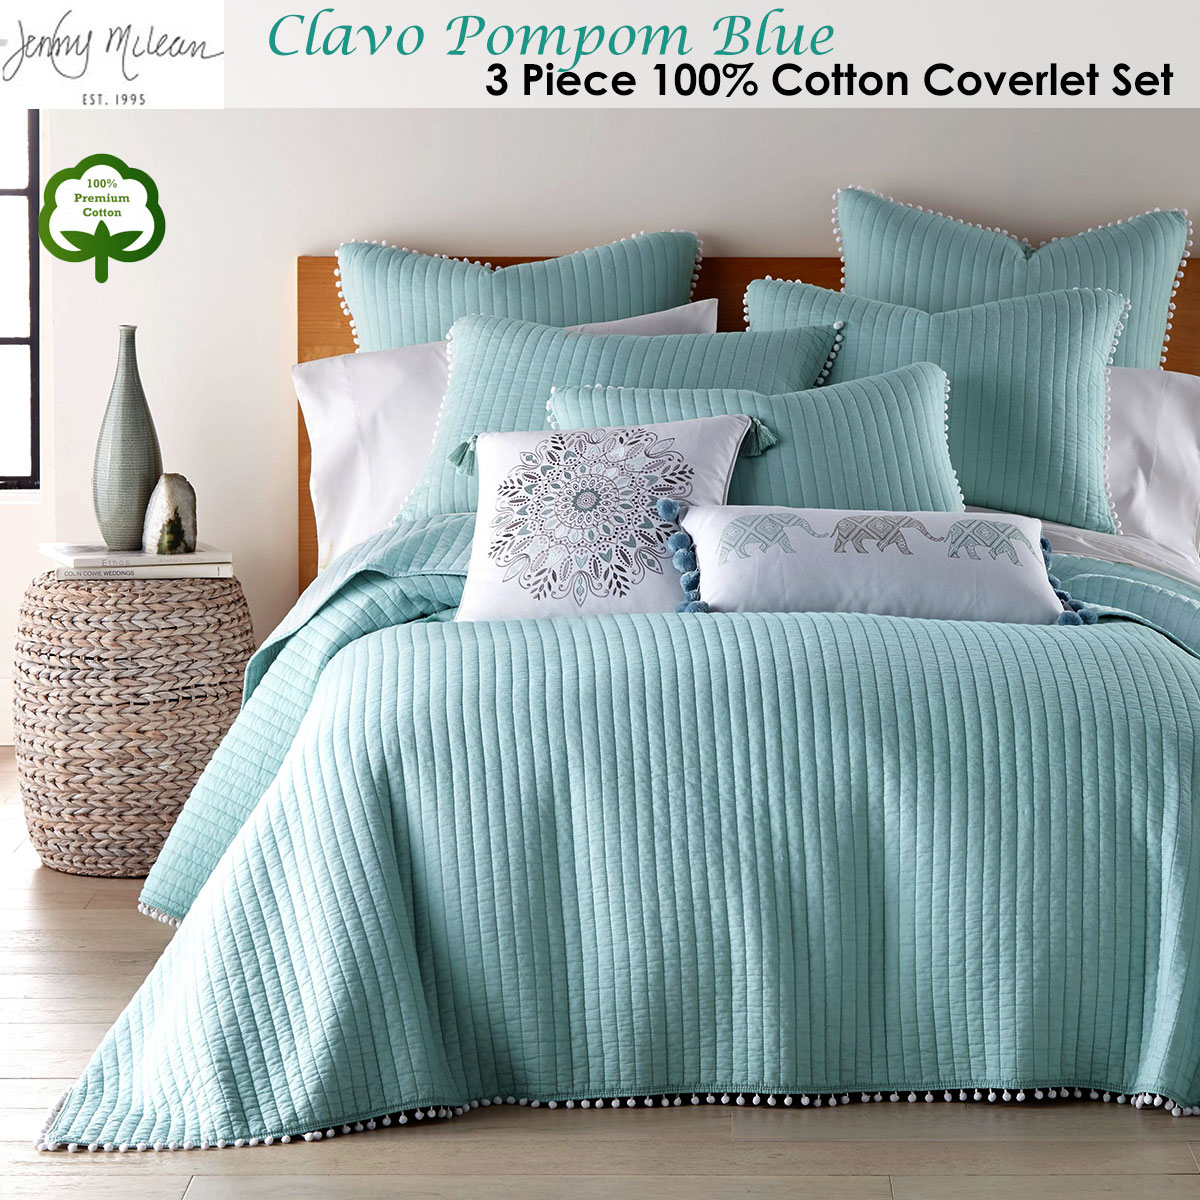 Clavo Pompom Blue 3 Piece 100% Cotton Coverlet Set by Jenny Mclean